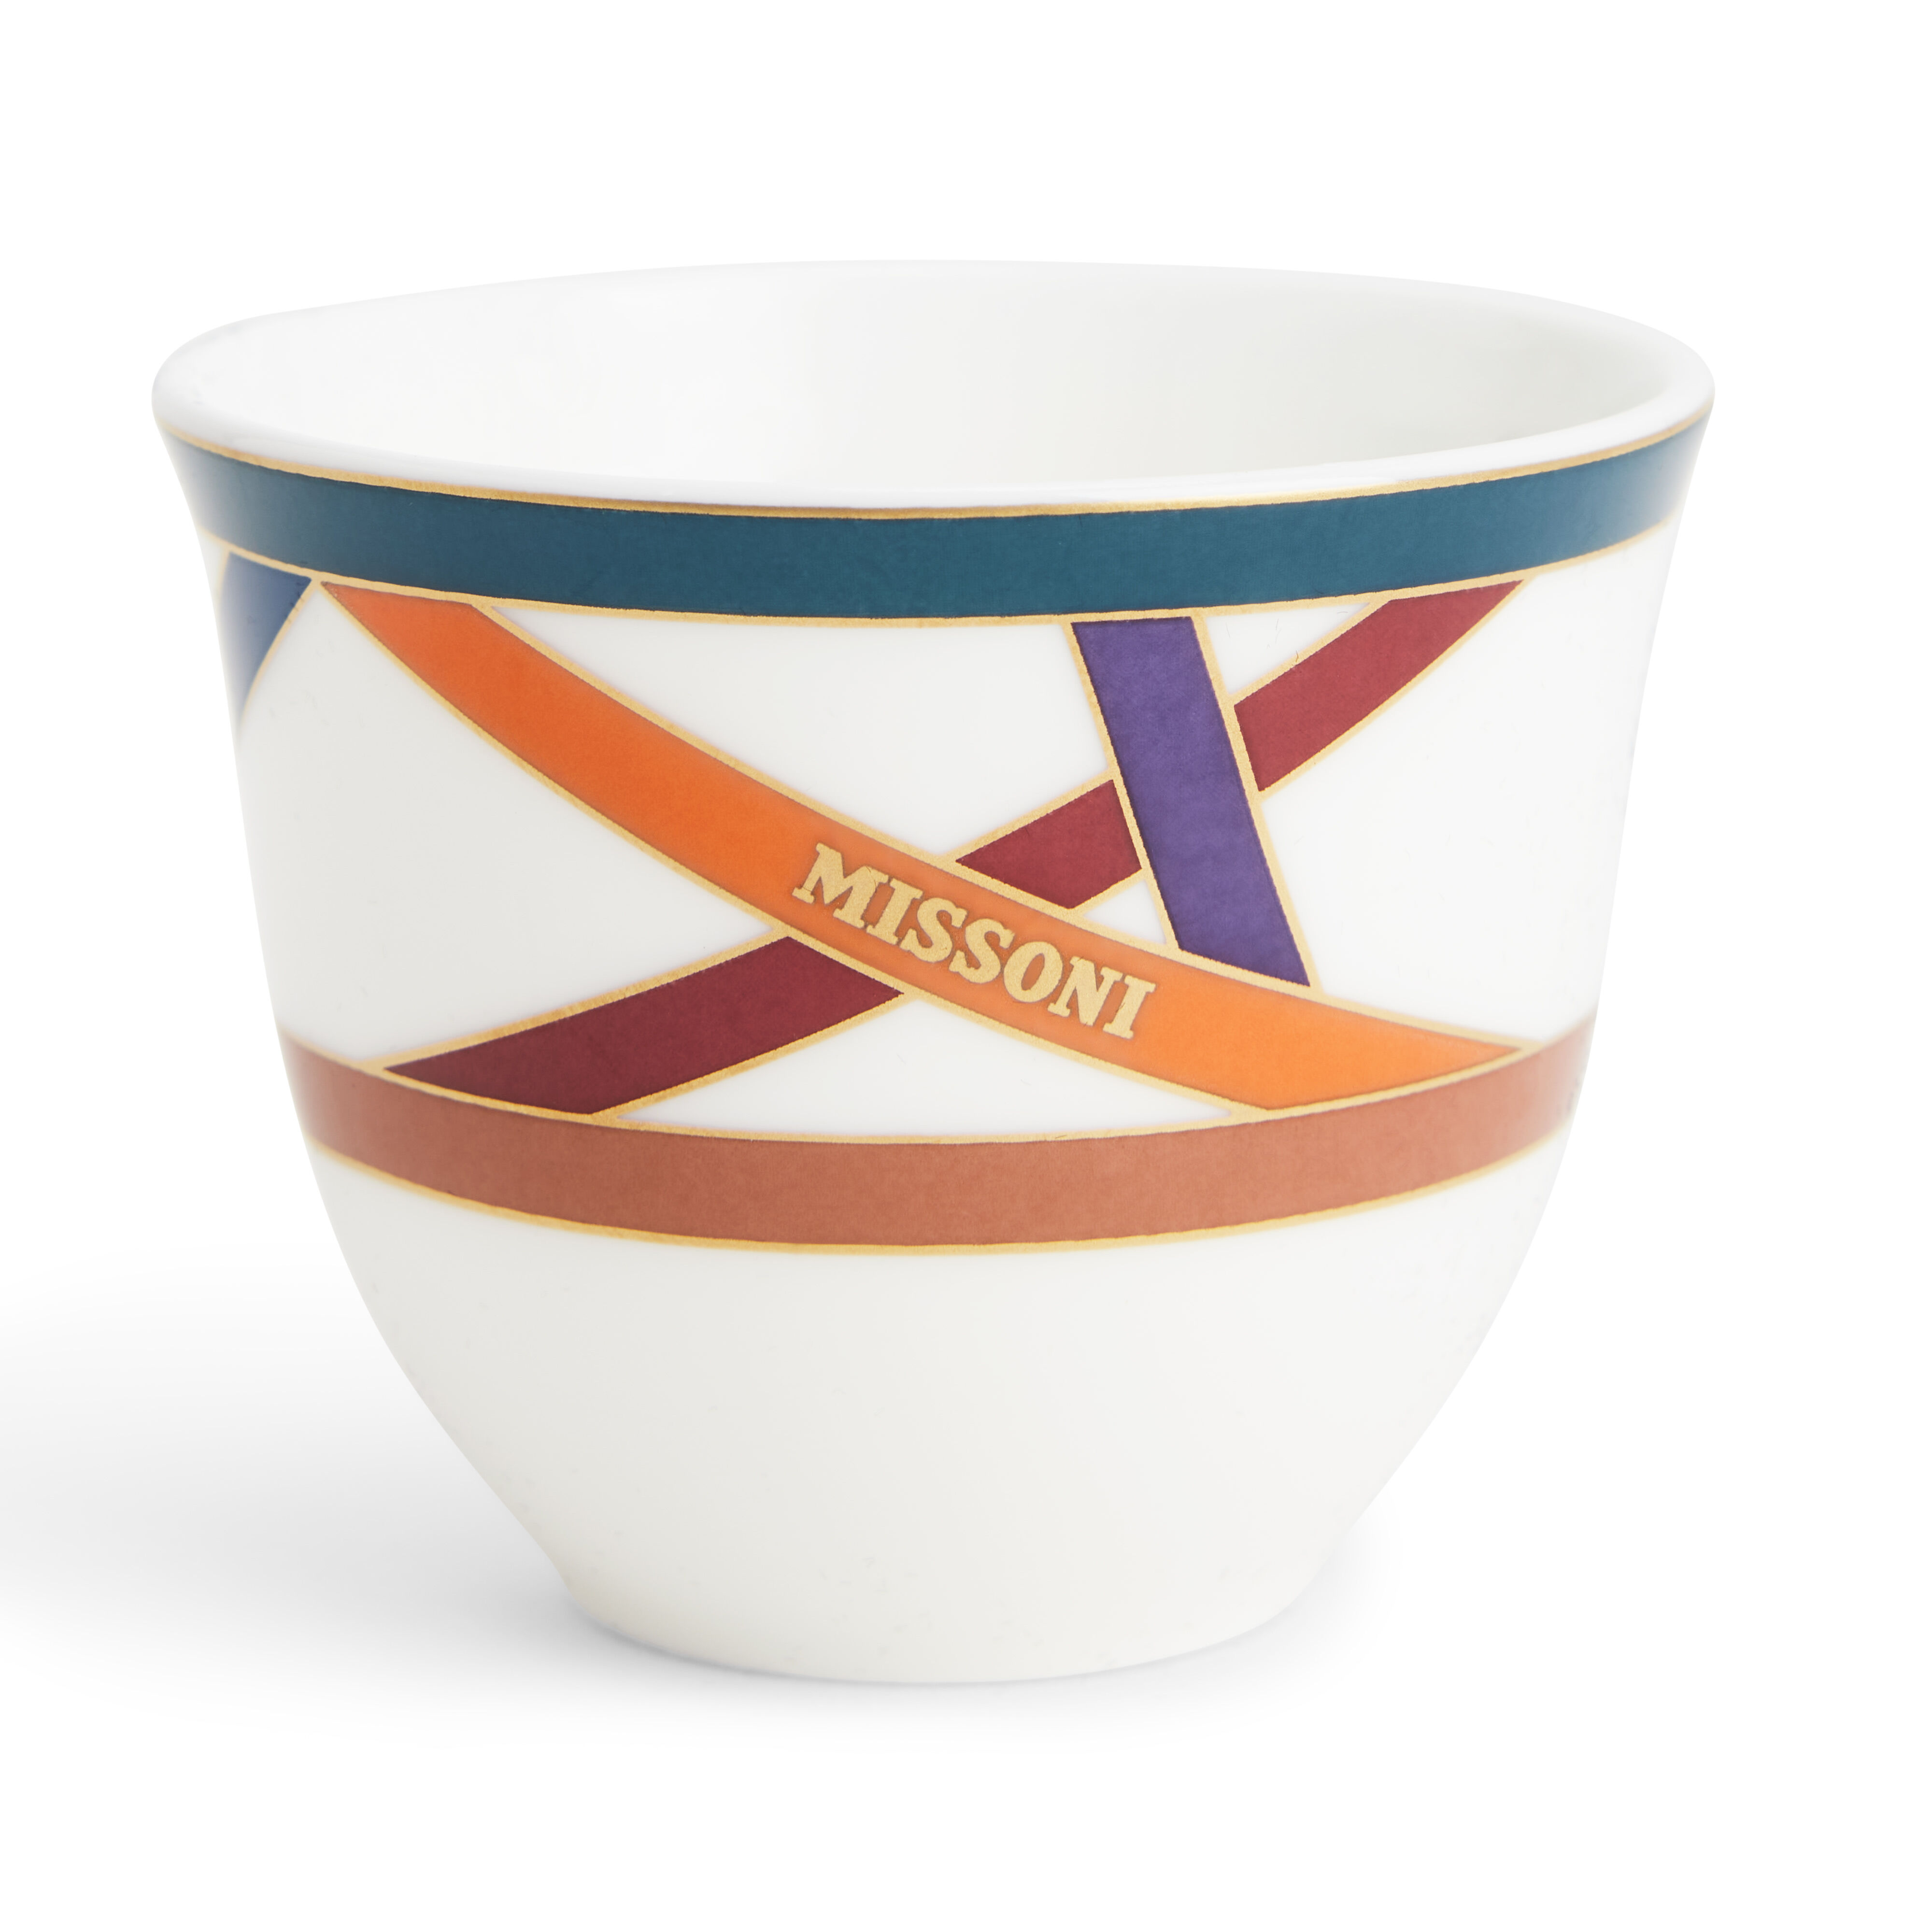 Missoni Home Nastri Arabic Cup - Set of 6 in a Luxury Box 